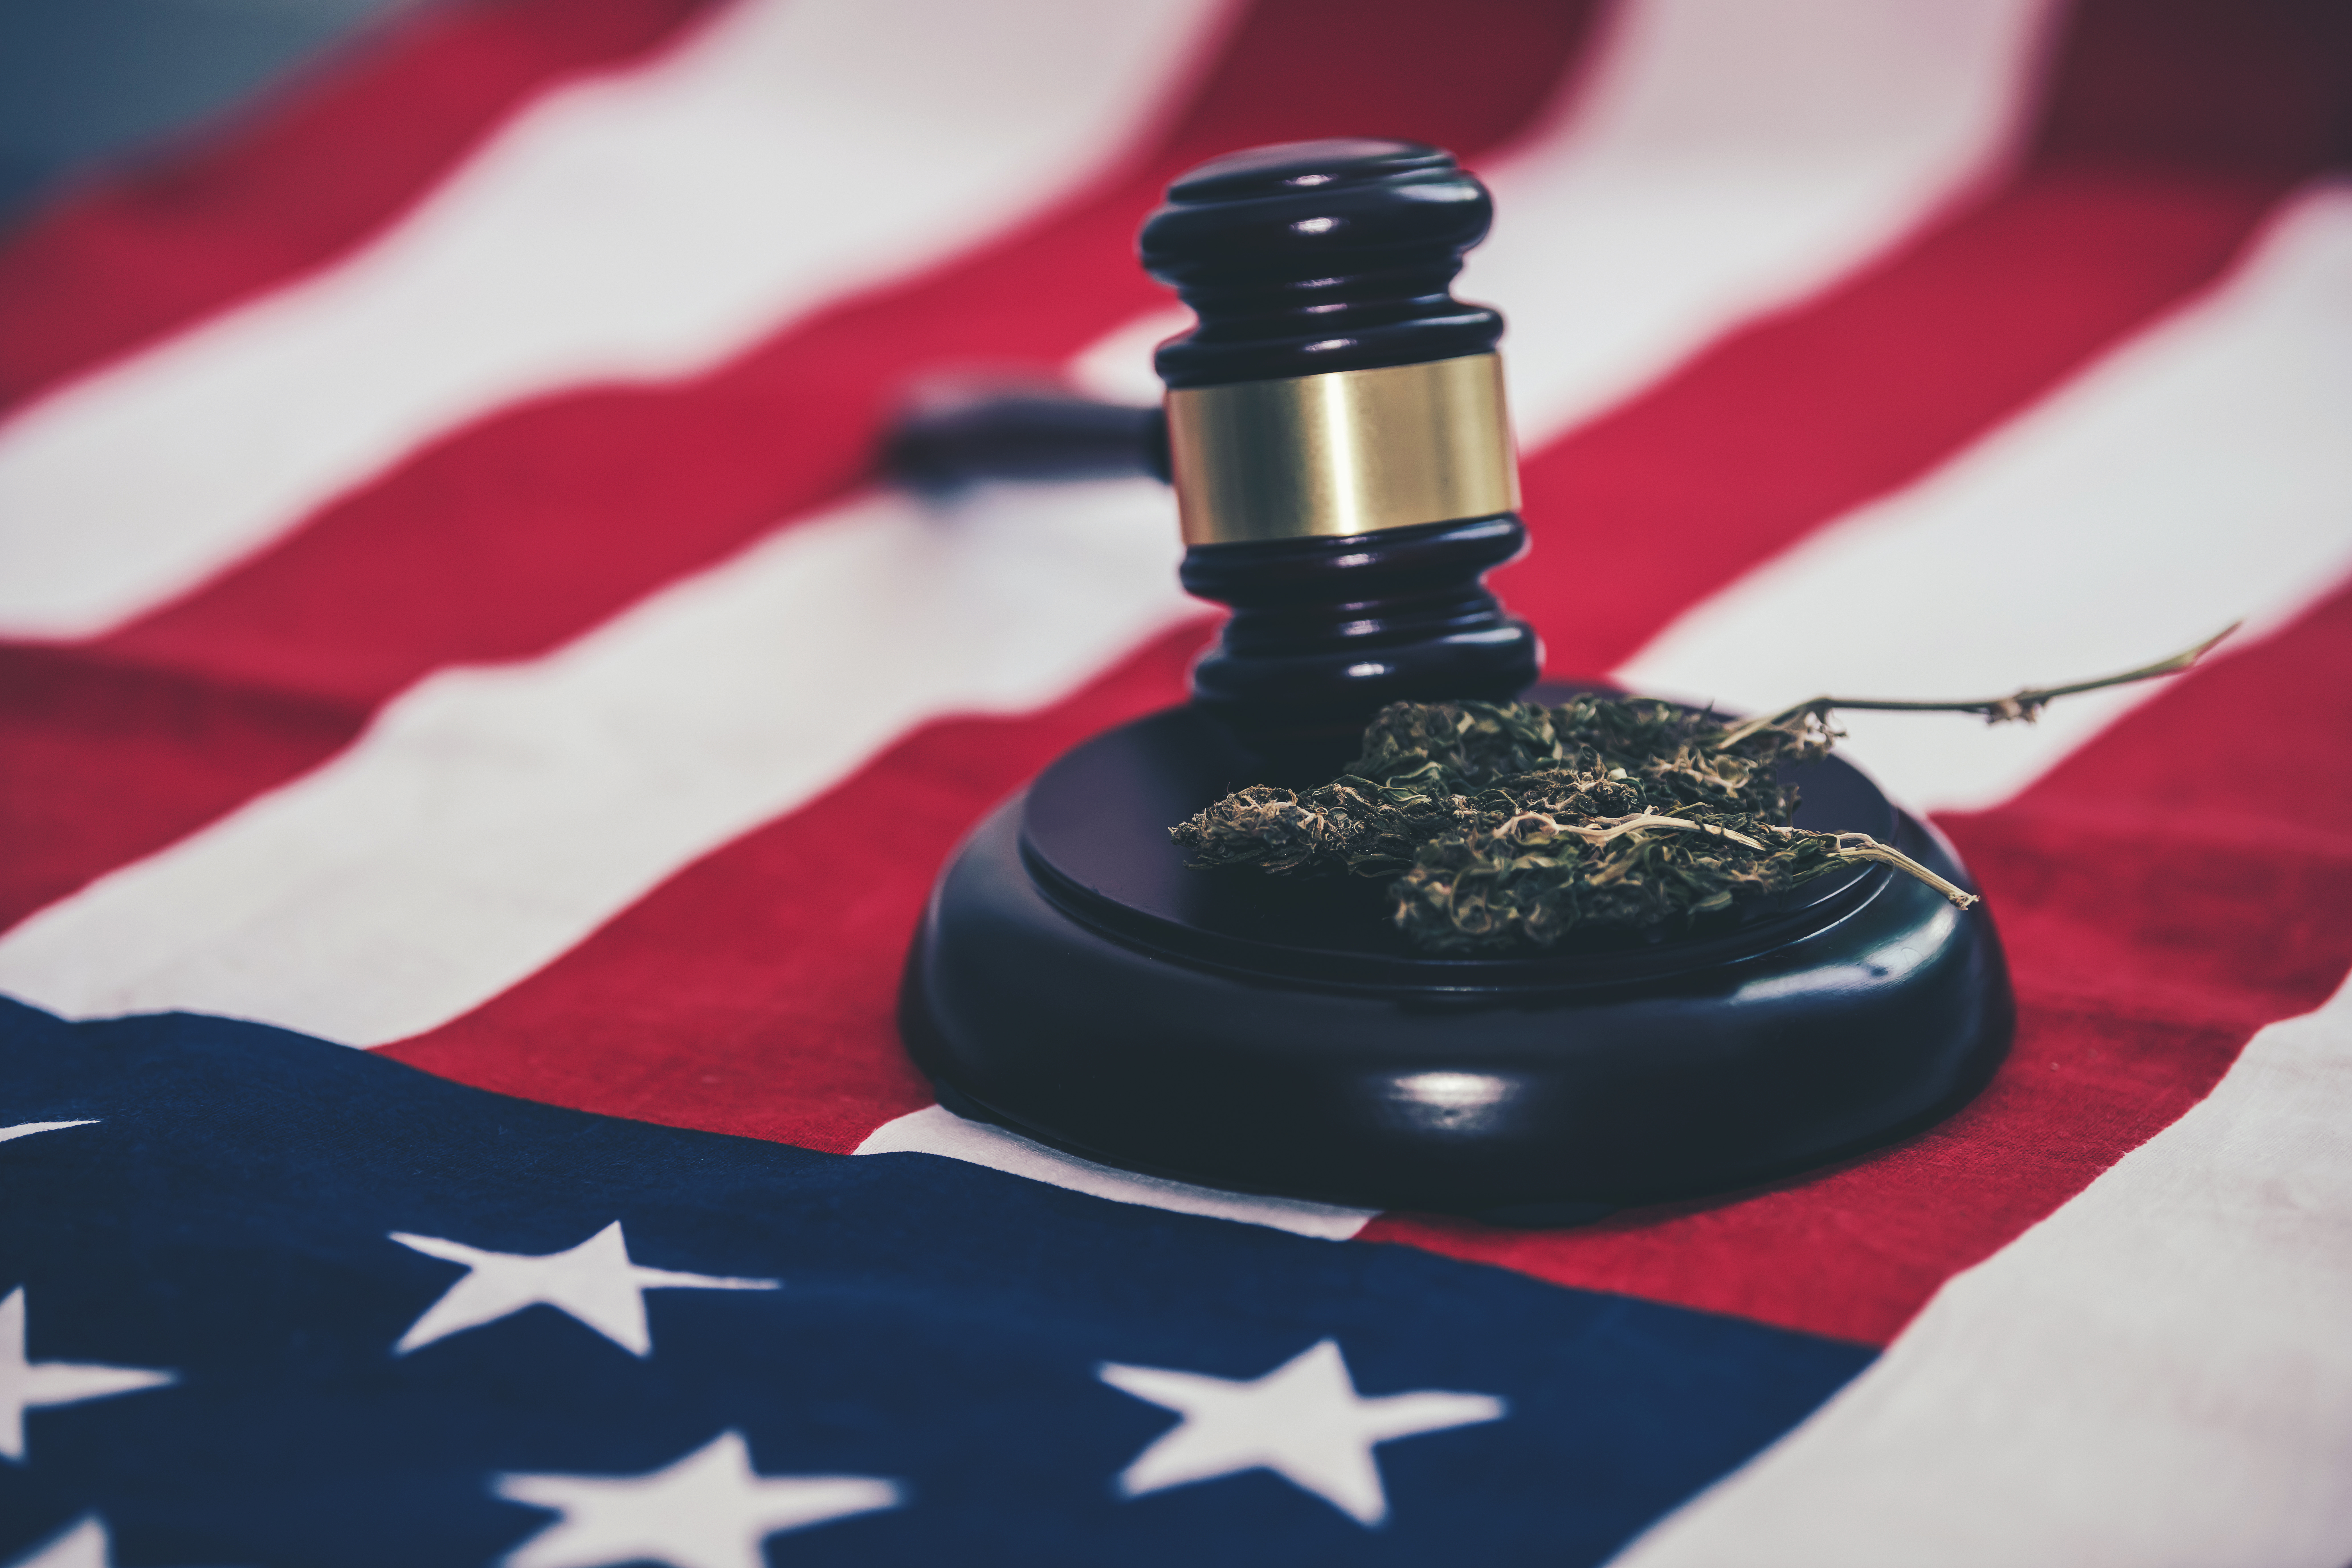  U.S. House Vote on Legal Marijuana Expected Friday